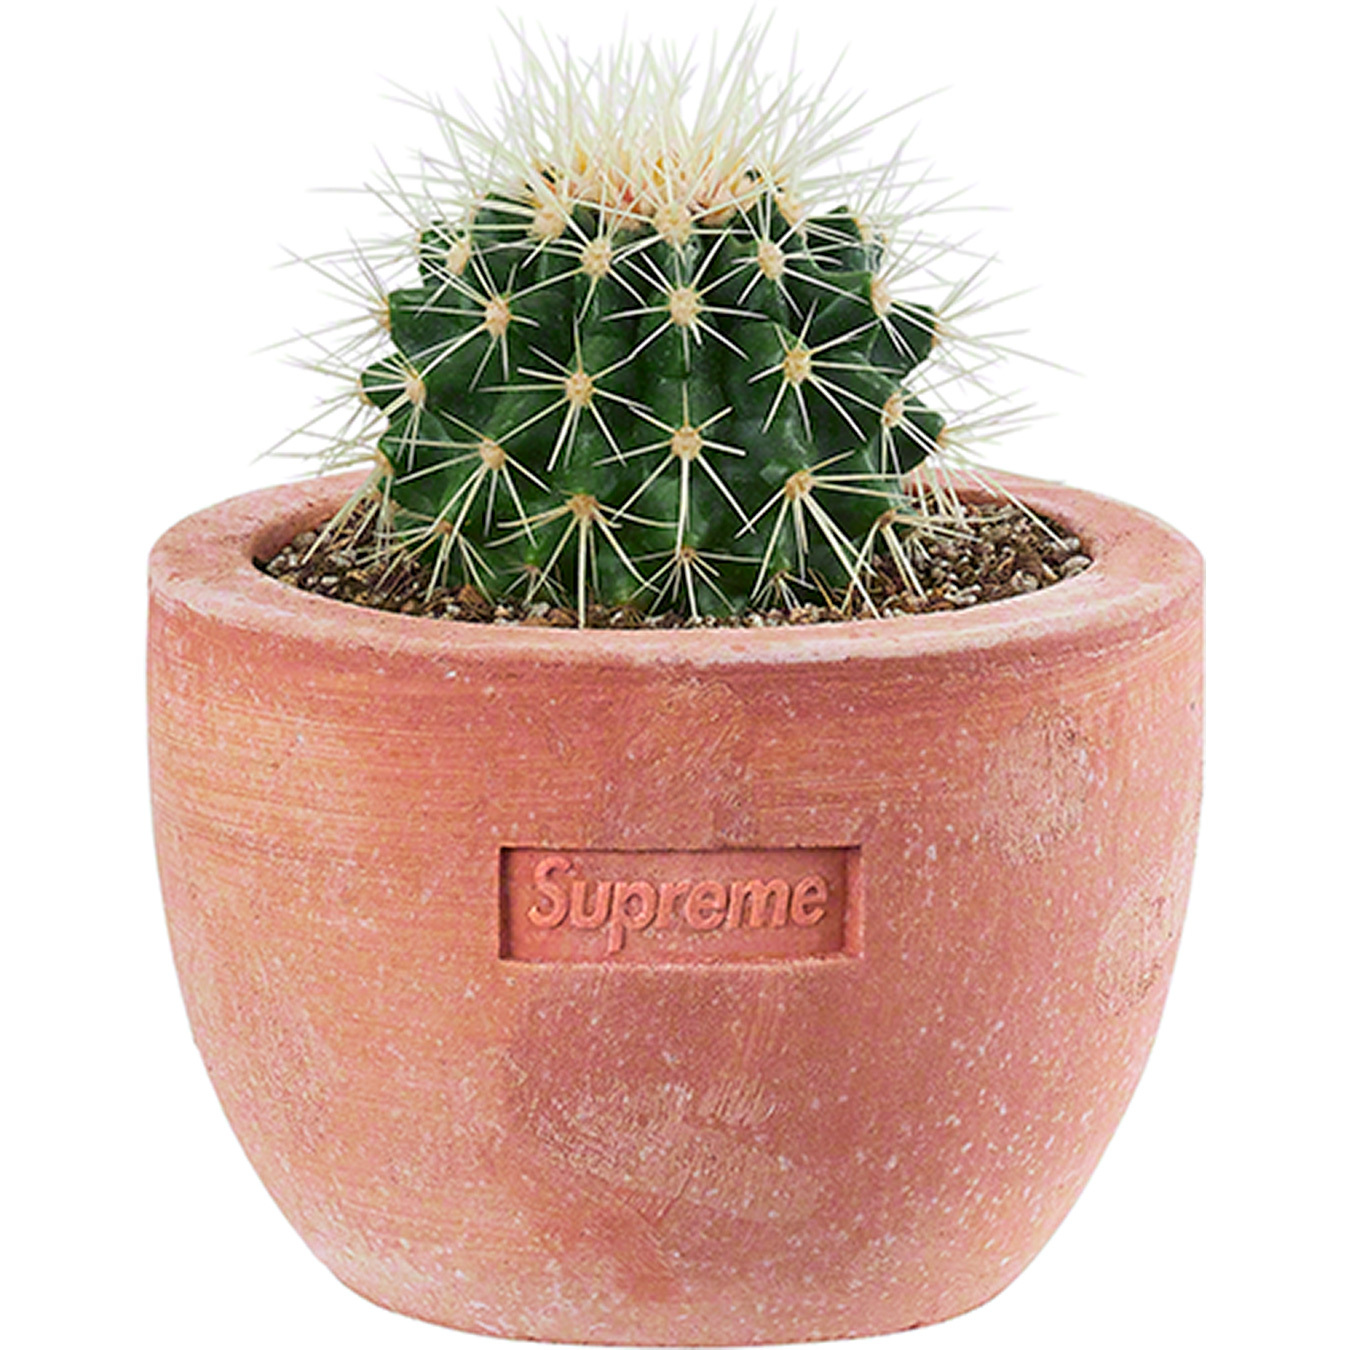 Supreme / Poggi Ugo Small Planter